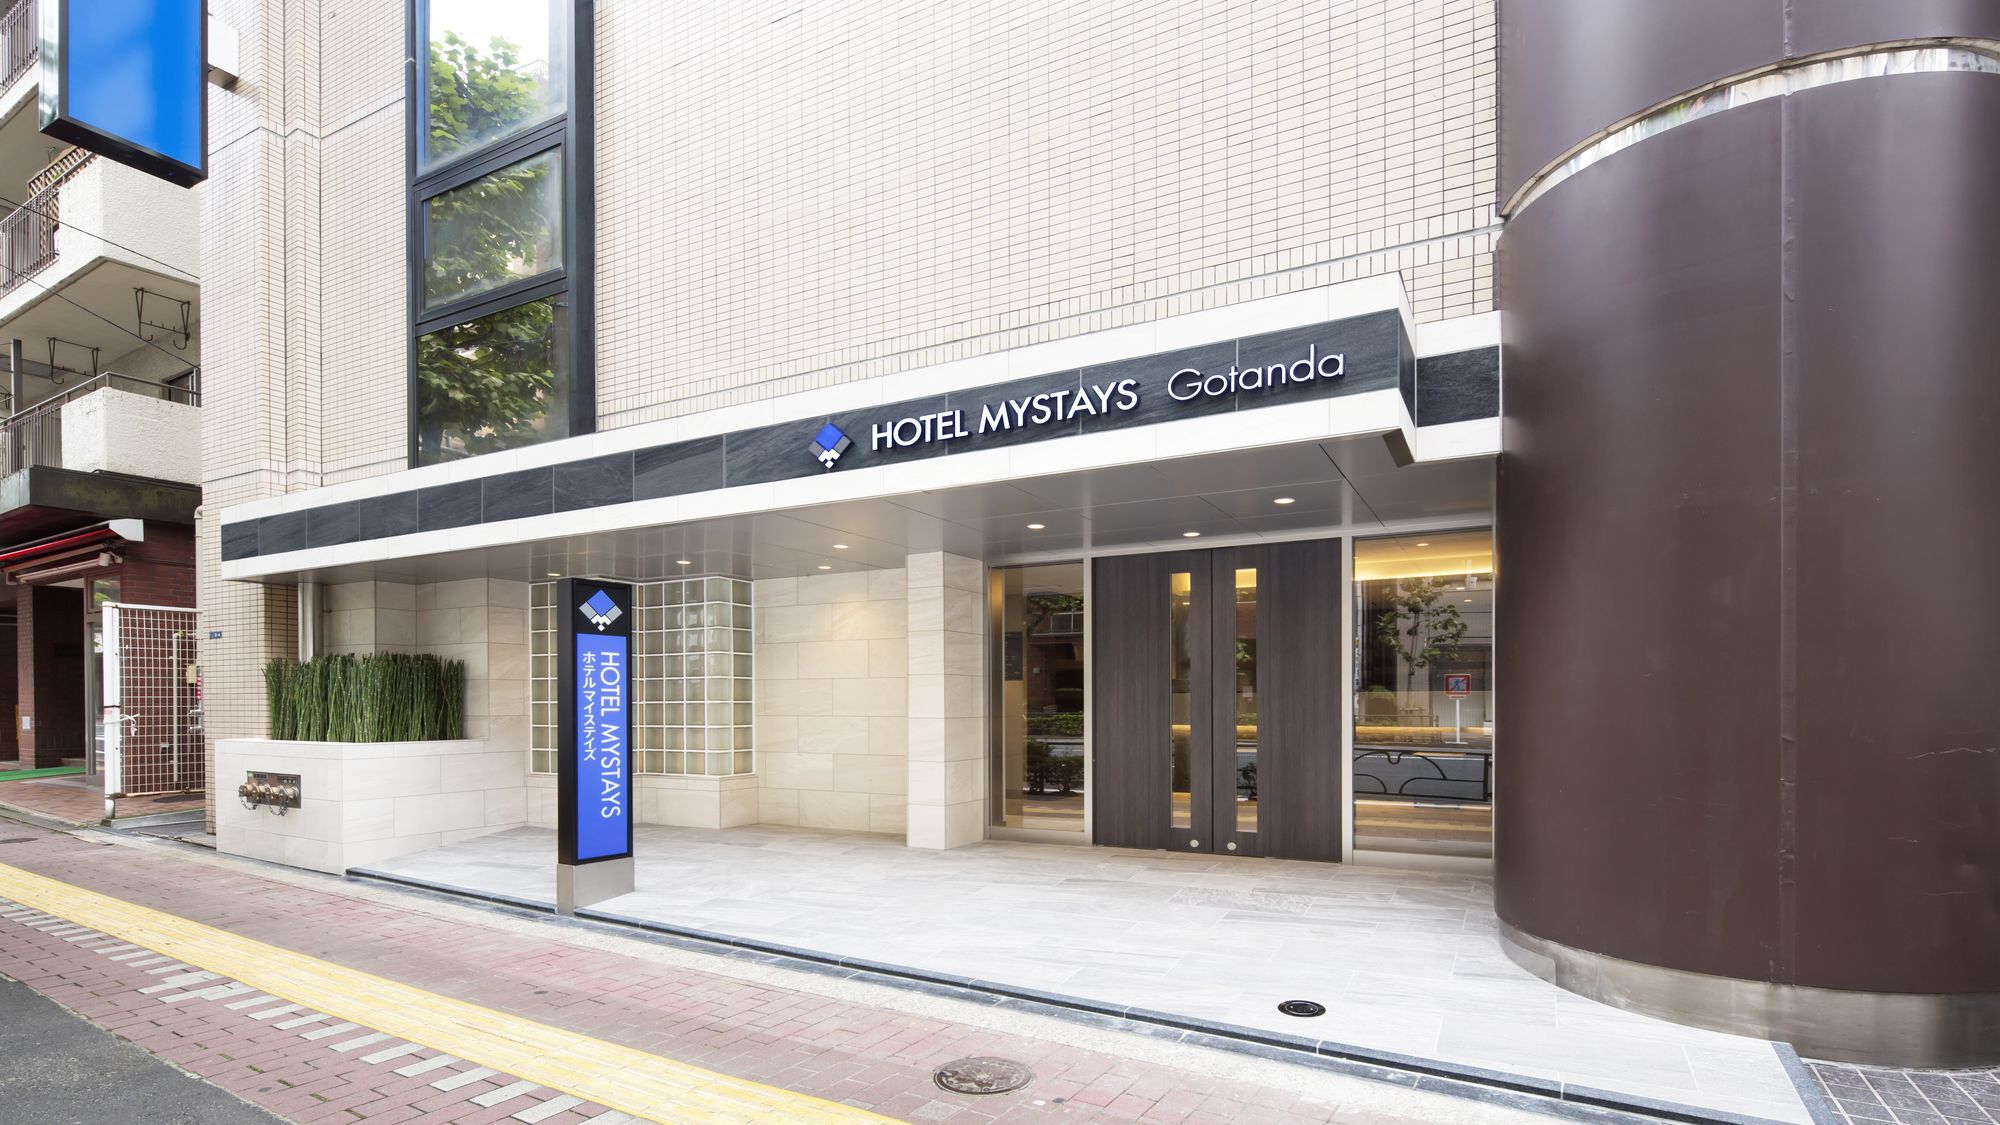 Hotel Mystays Gotanda Tokyo Best Price Guarantee Mobile Bookings Live Chat